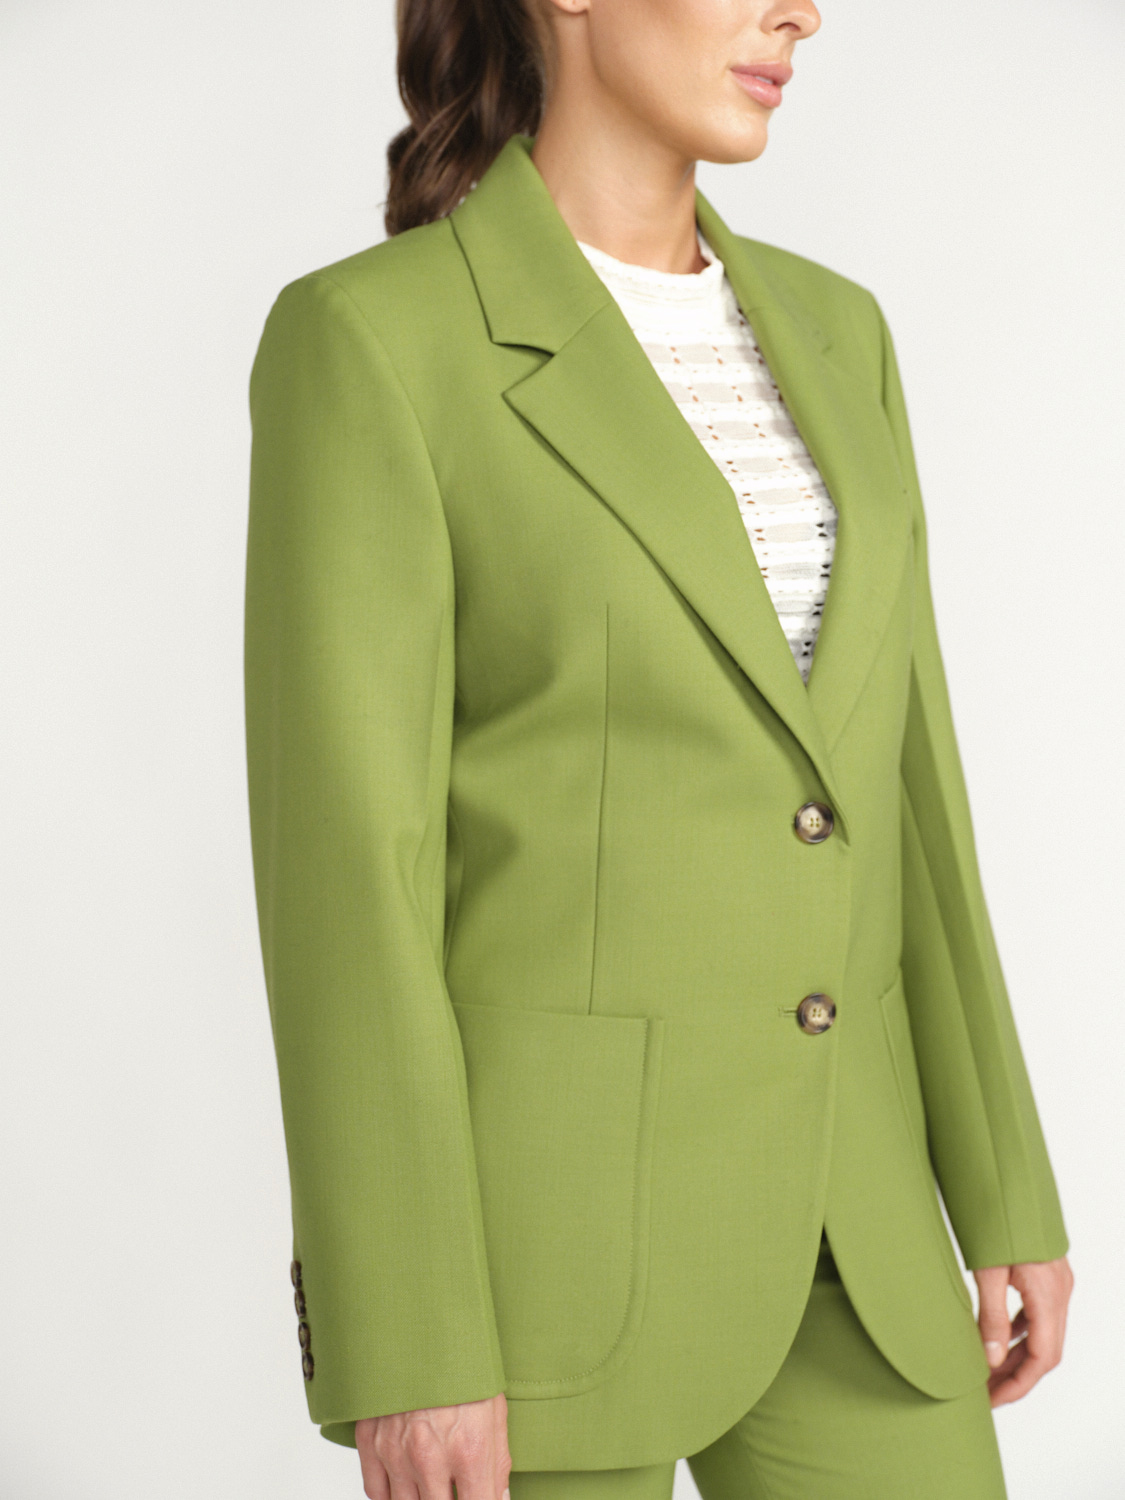 Victoria Beckham Patch Pocket - Classic blazer with patch pockets green 36